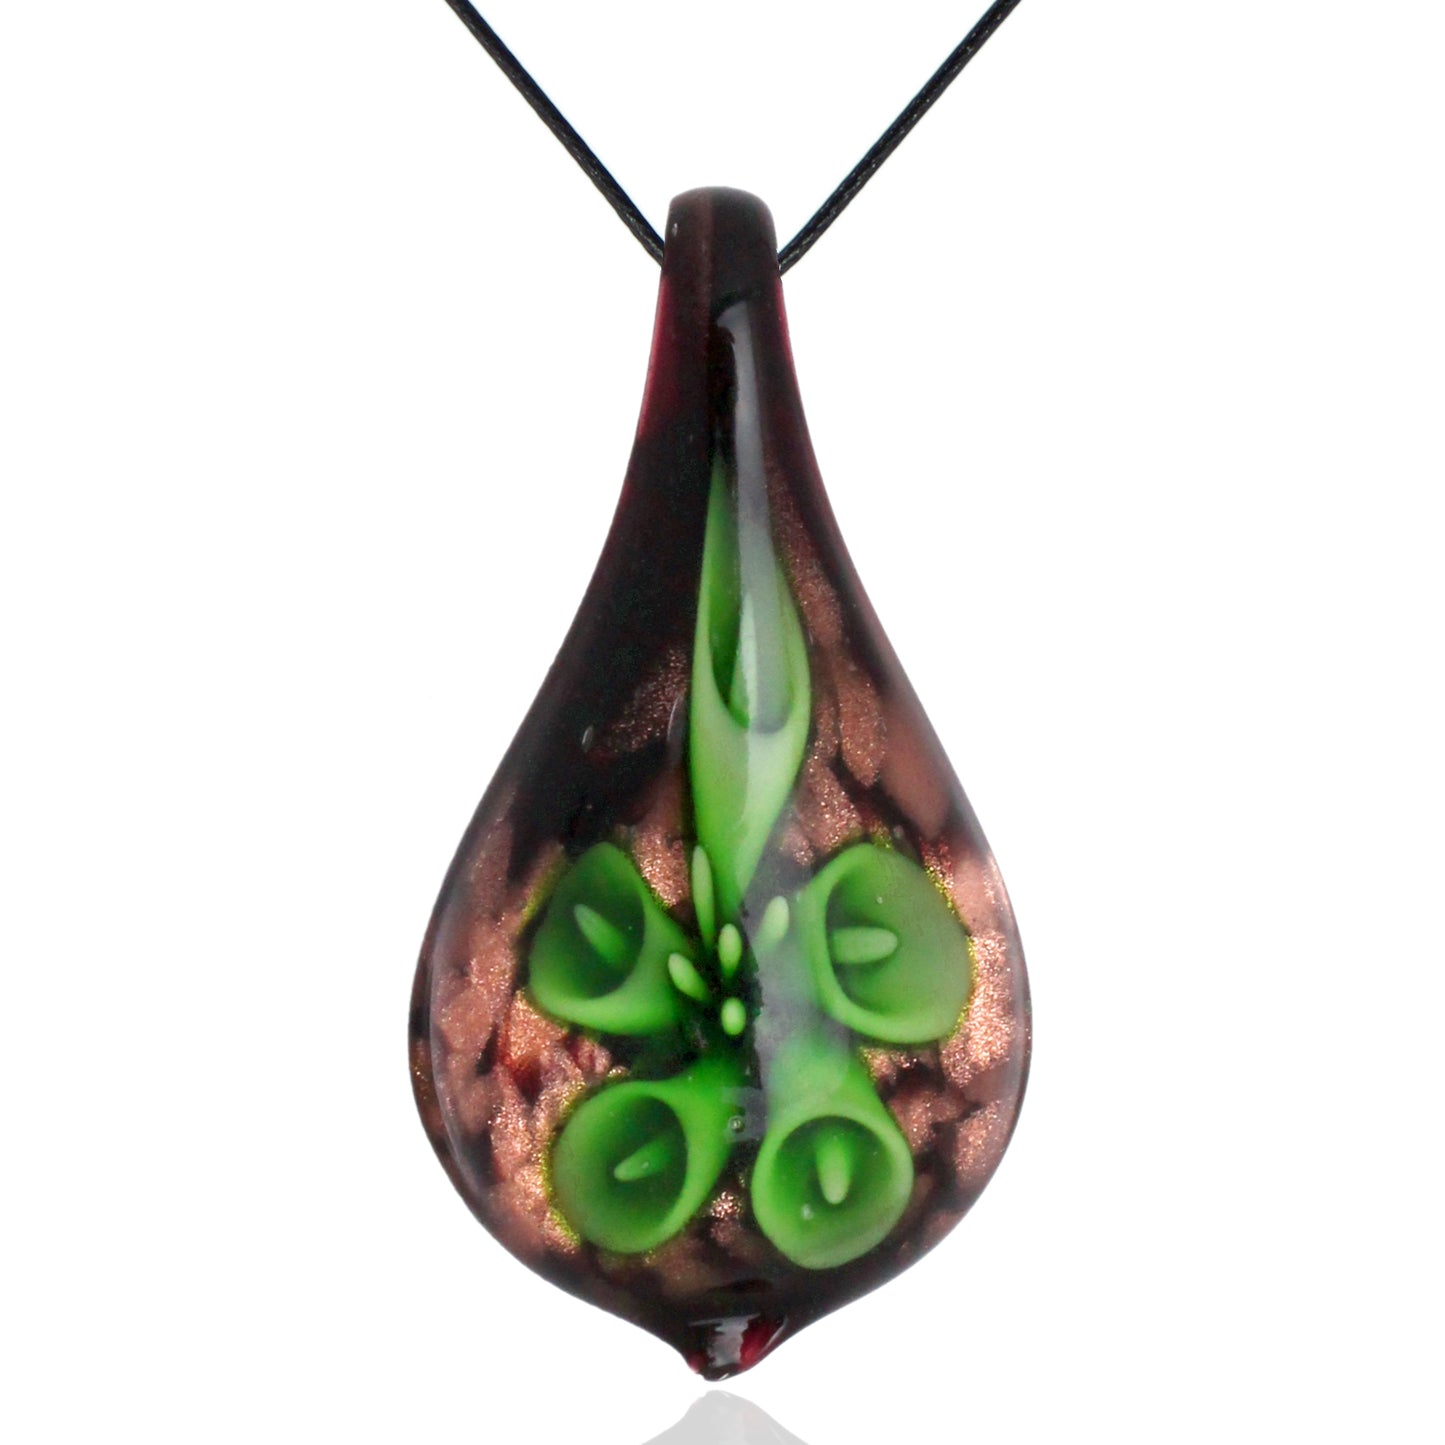 BESHEEK Handmade Murano Inspired Blown Glass Lampwork Art Black and Green Lily Teardrop Necklace Pendant ? Handcrafted Artisan Hypoallergenic Italian Style Jewelry